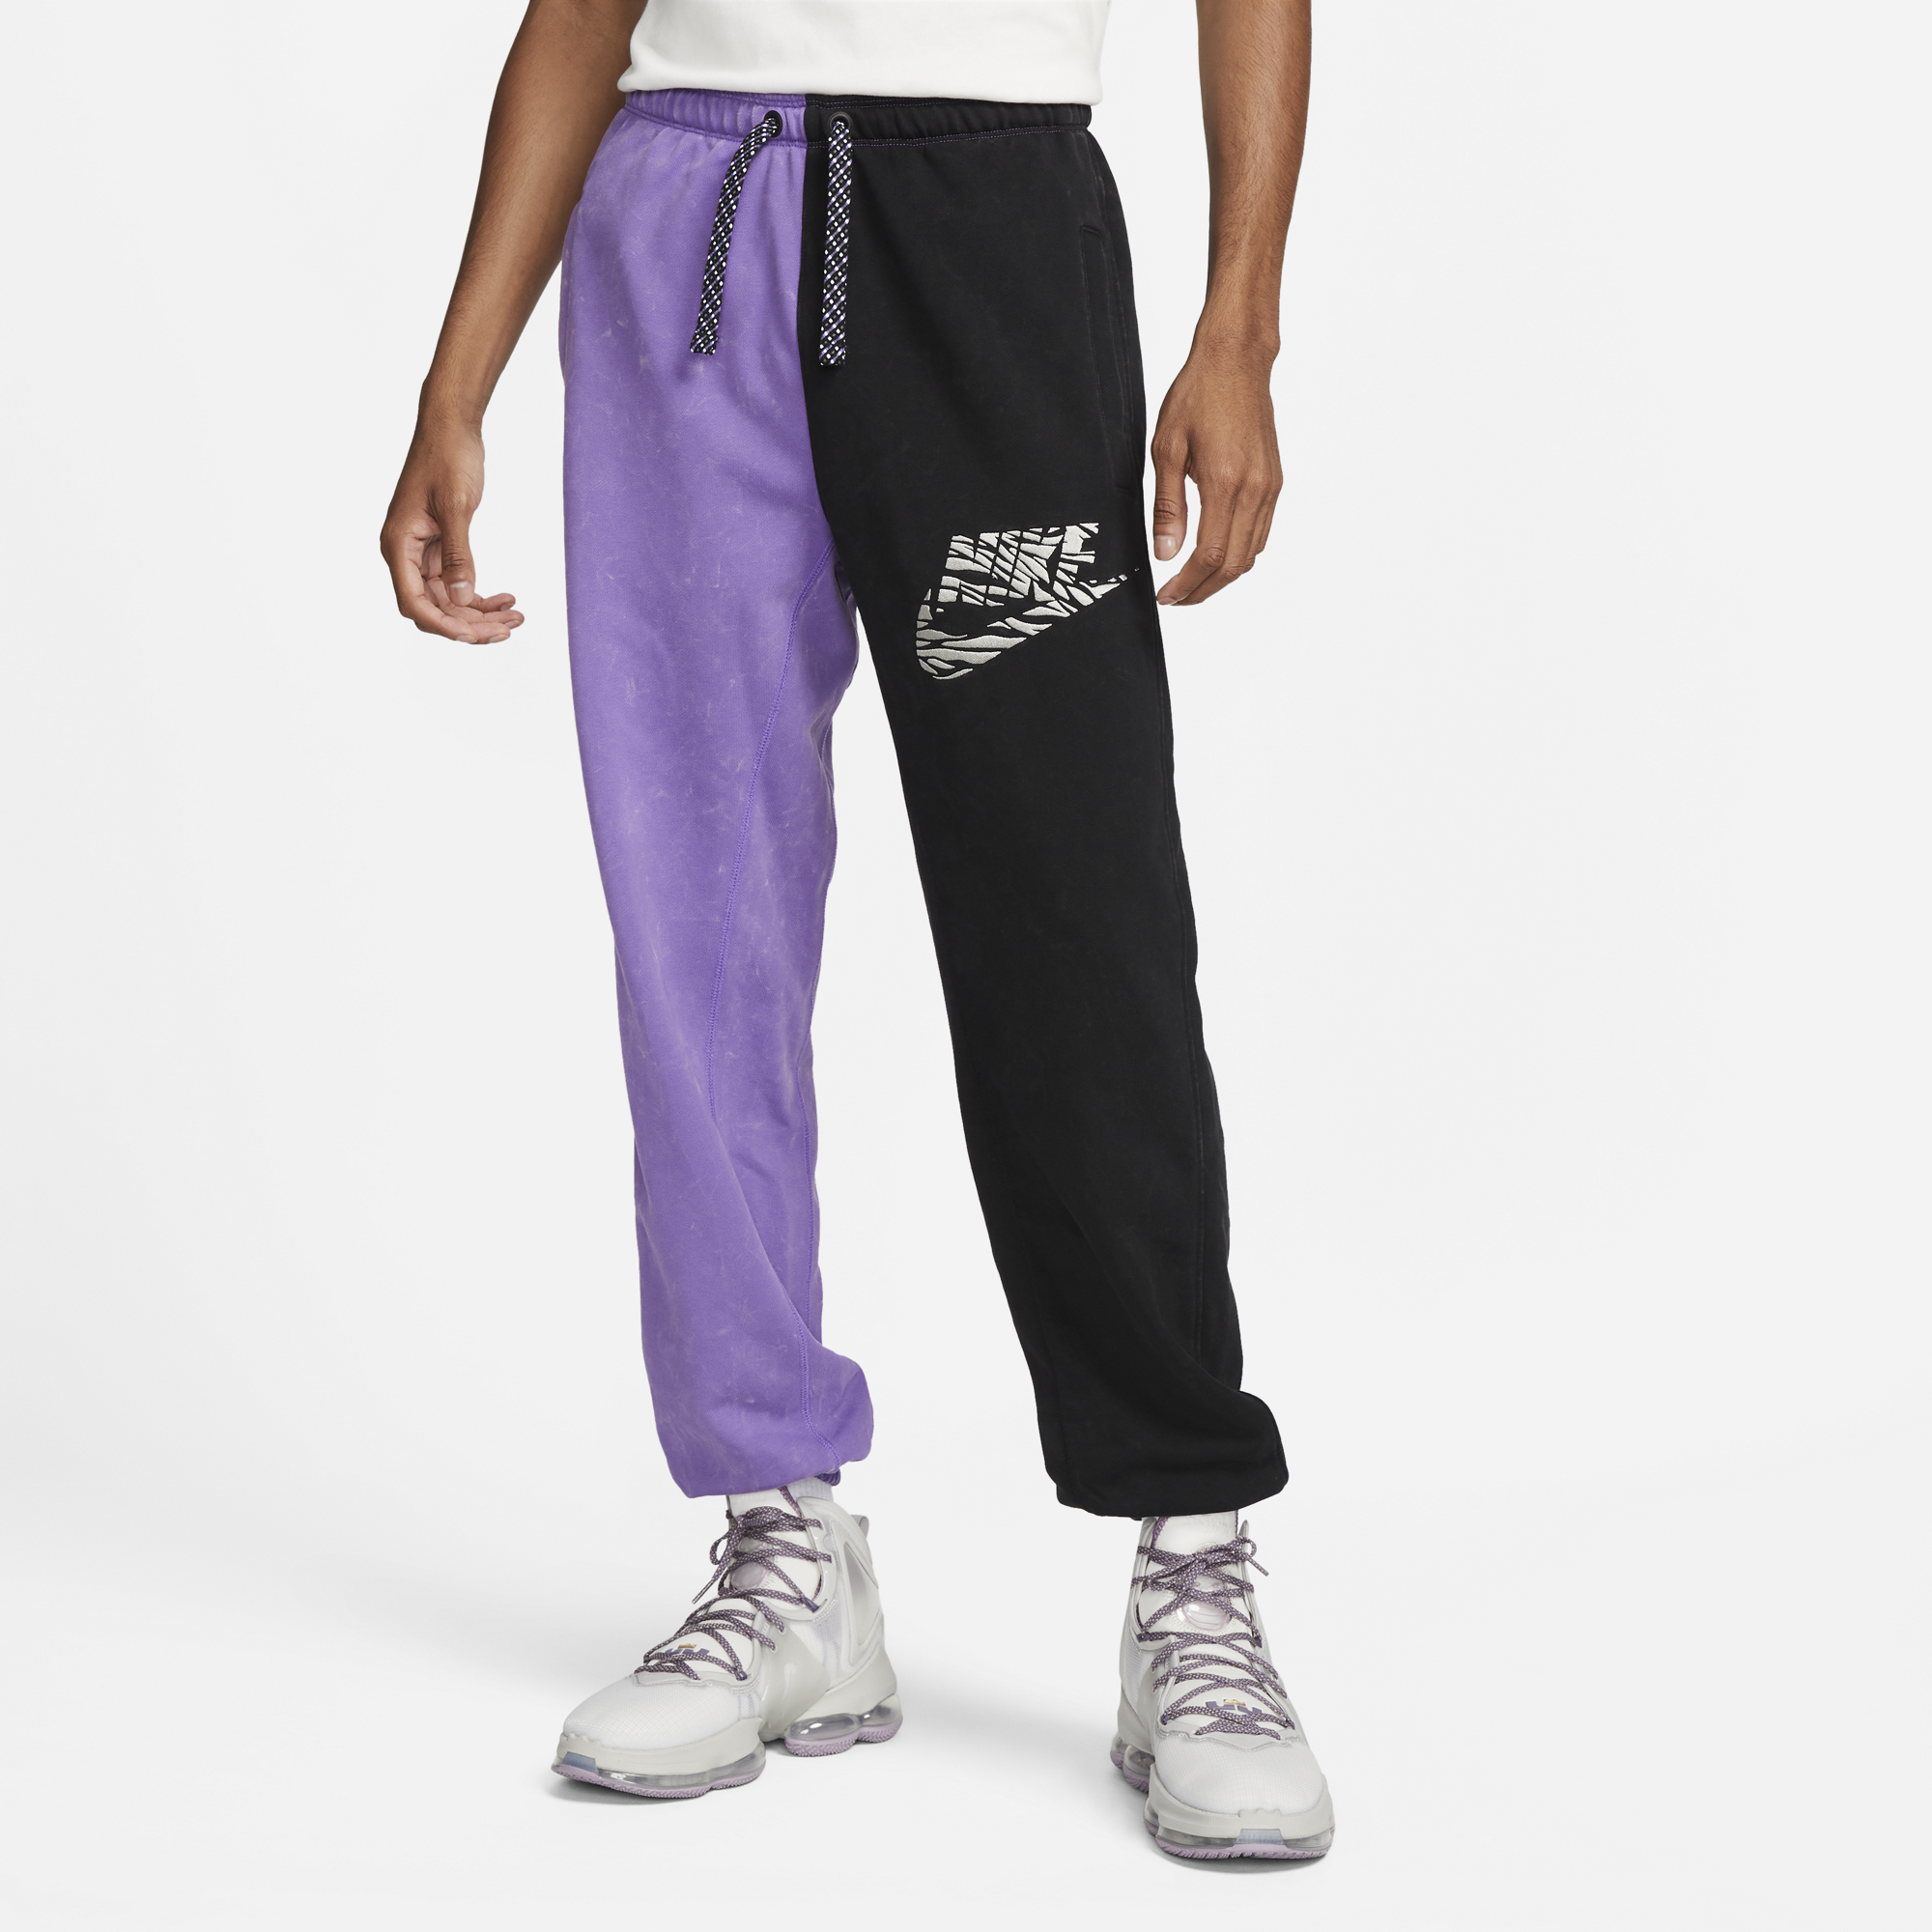 Nike Dri-FIT Standard Issue Premium Basketball Black/Purple Pants